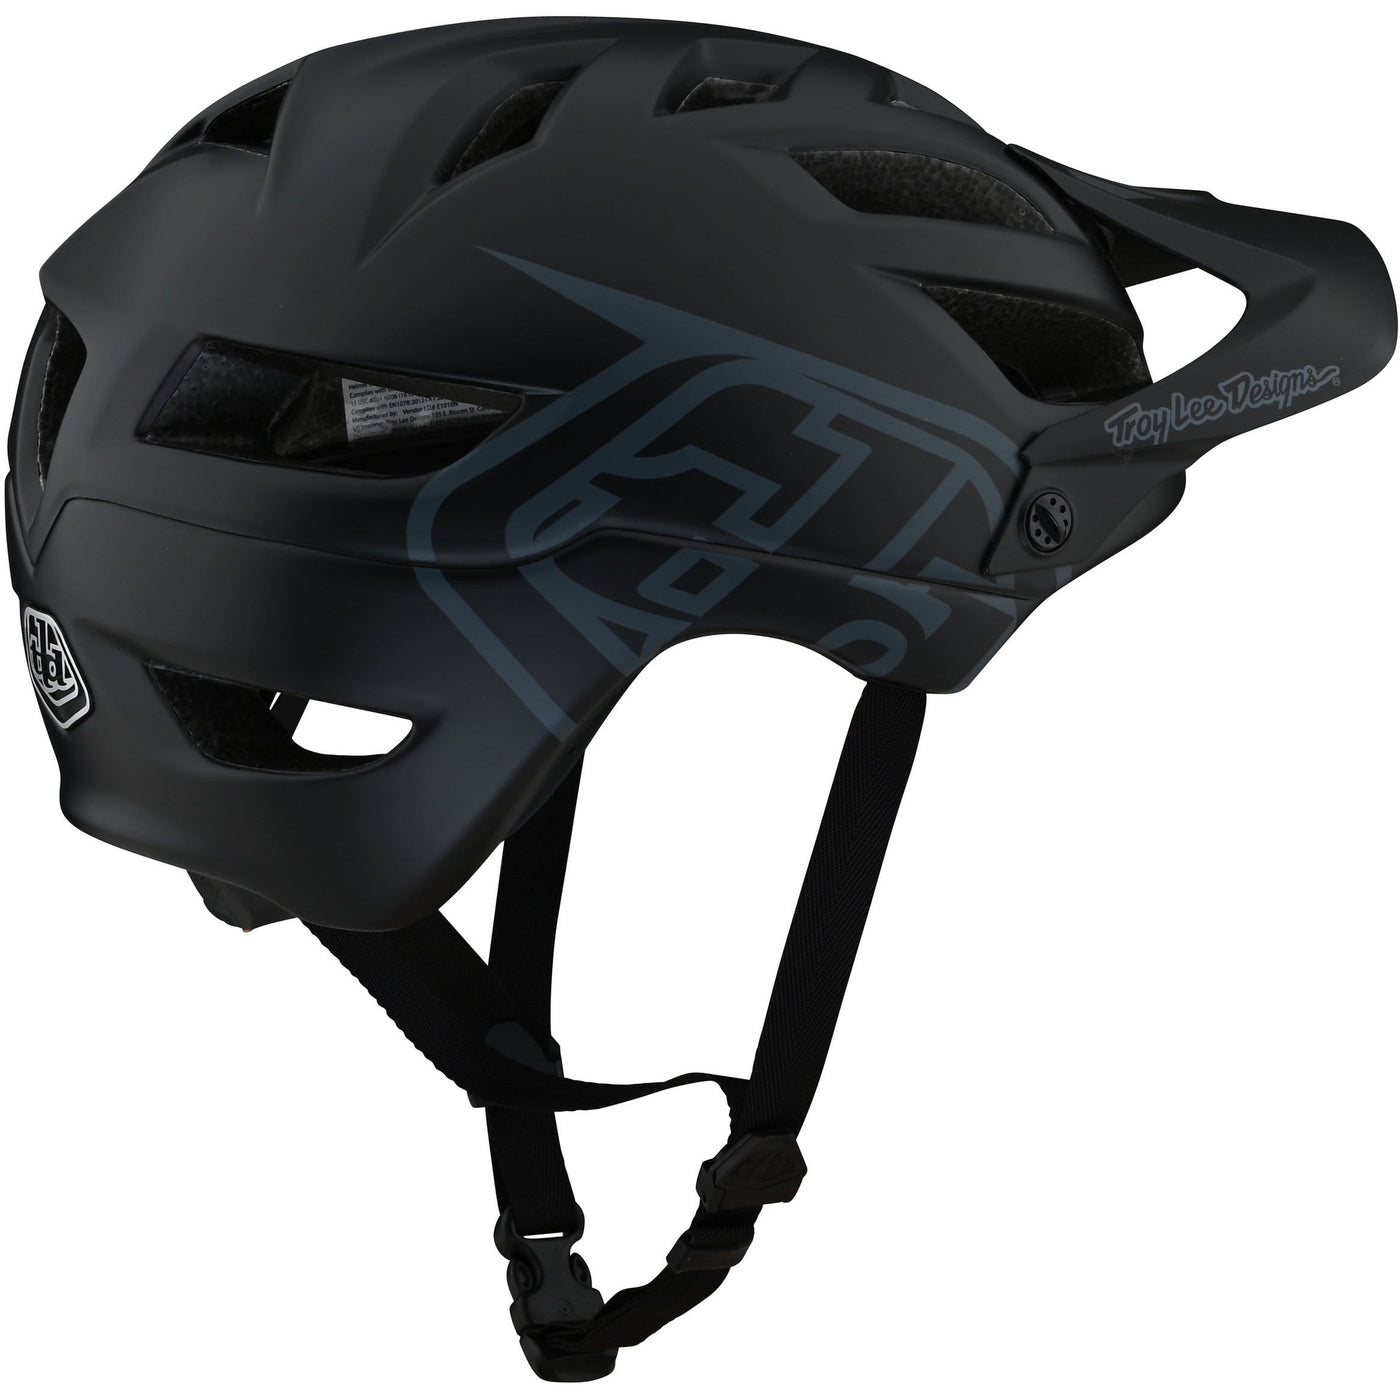  TLD A1 Bike Helmet - Black